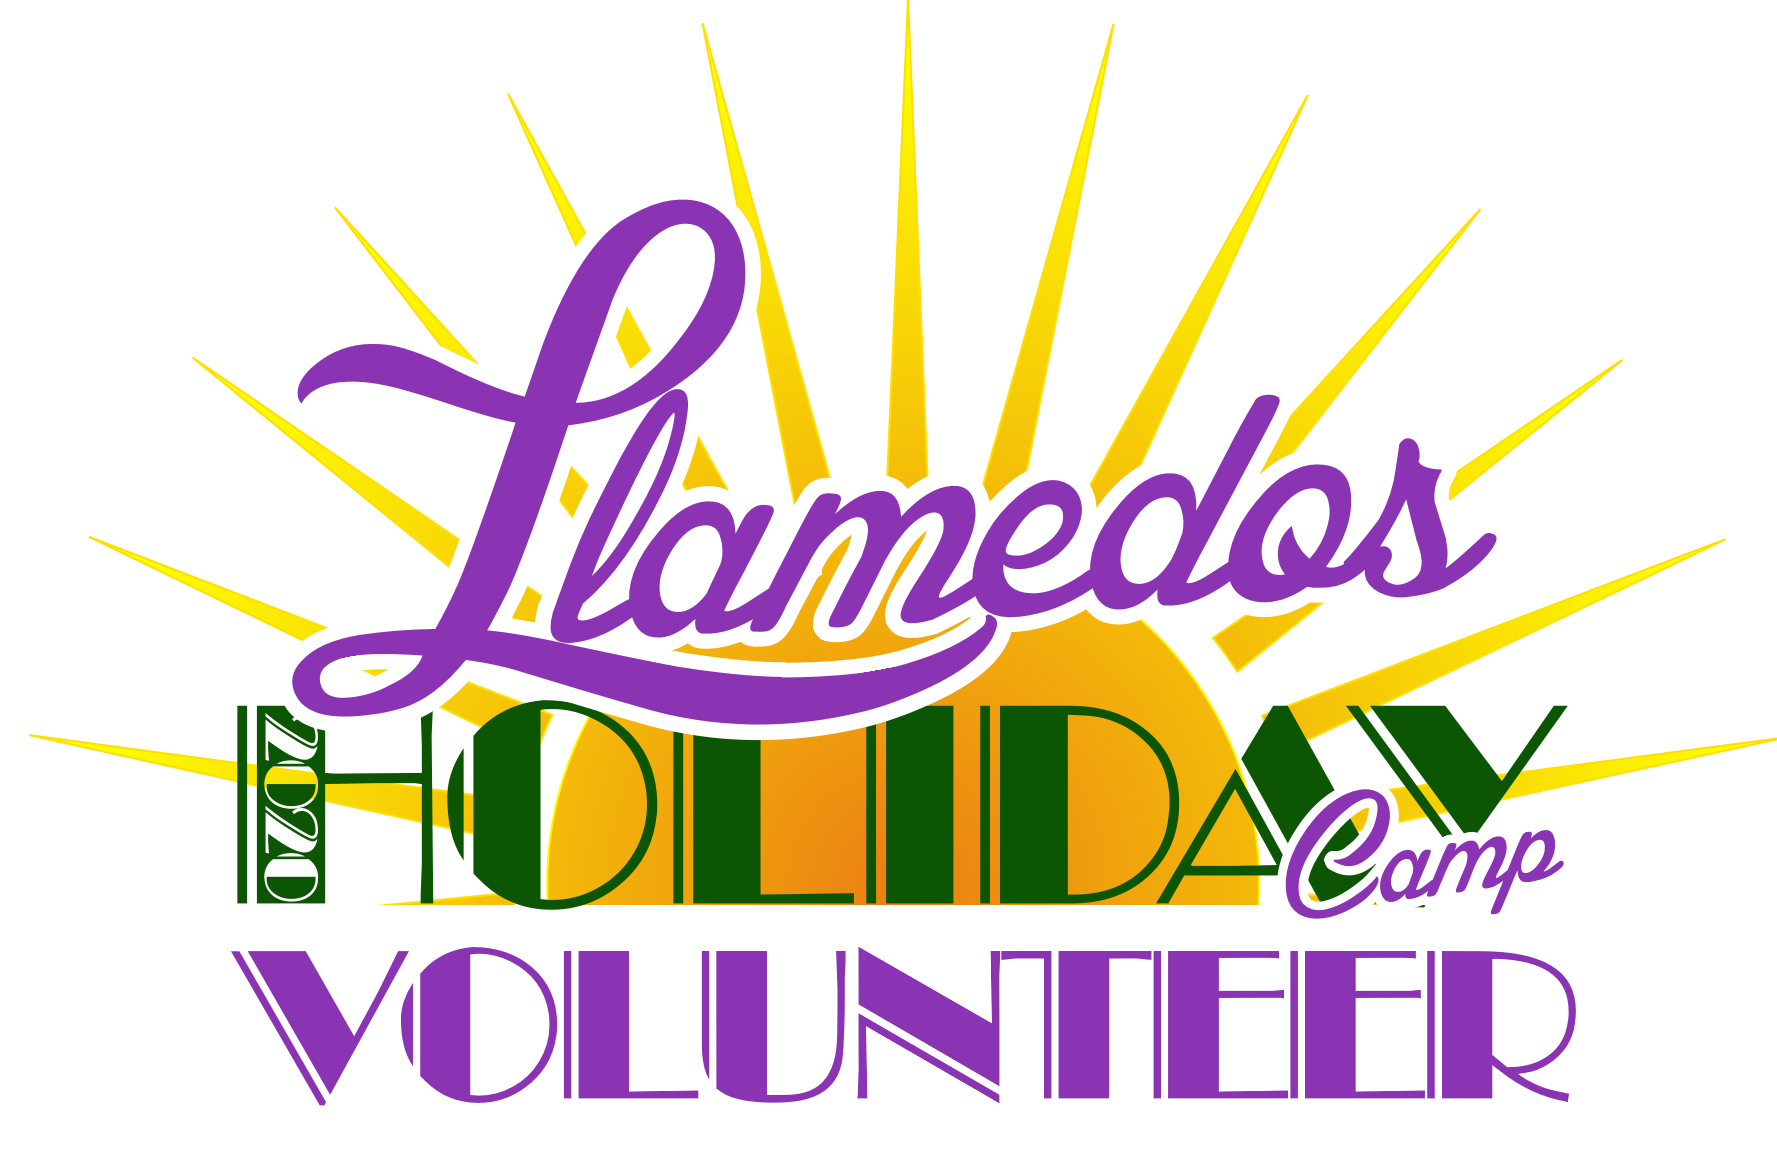 Llamedos Holiday Camp Volunteer